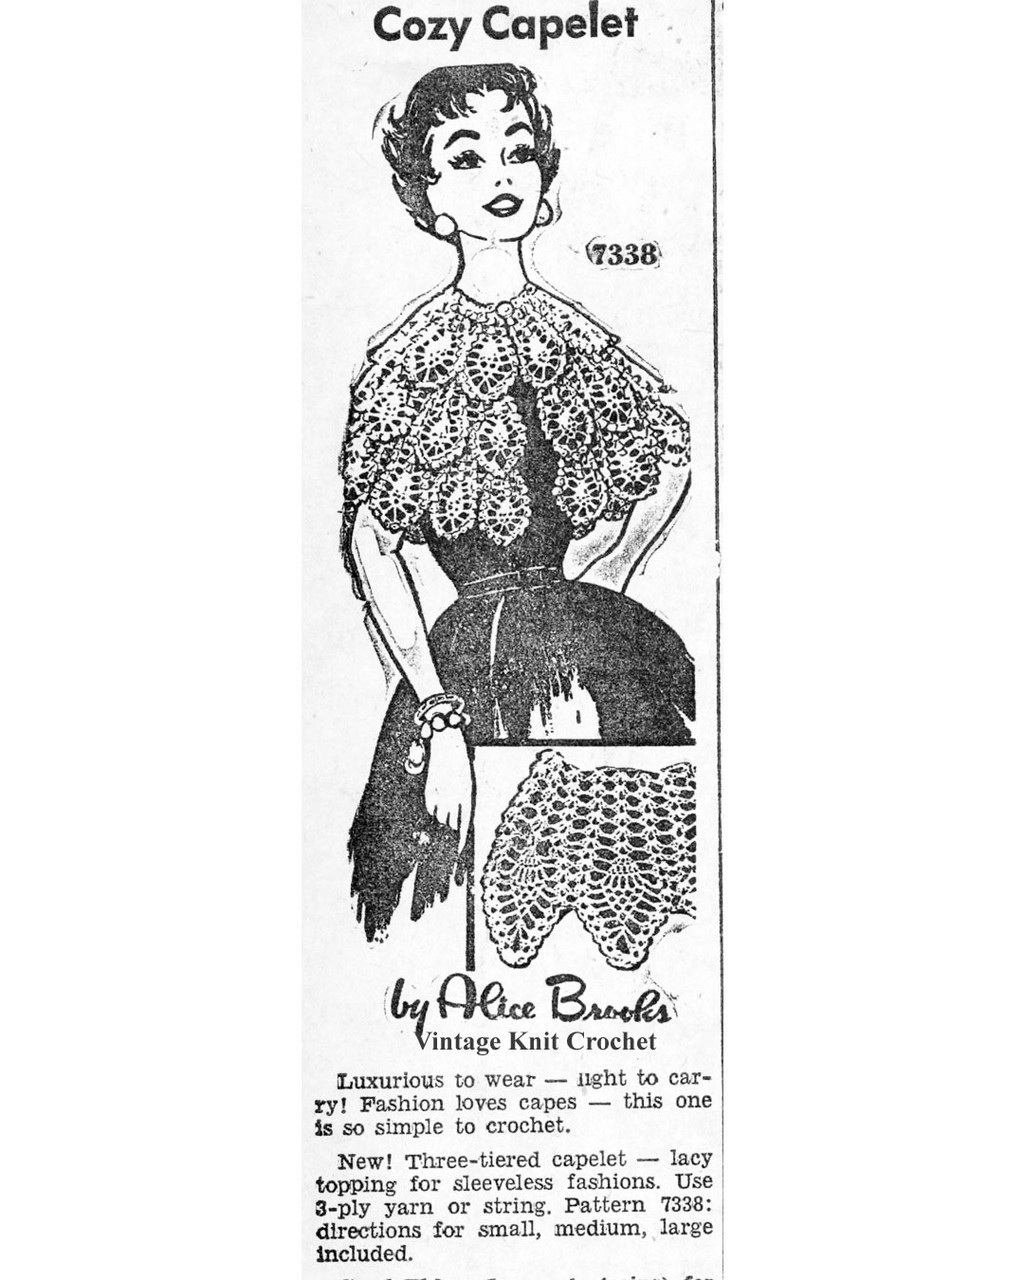 Mail Order Design 7338 Crochet pineapple capelet newspaper advertisement